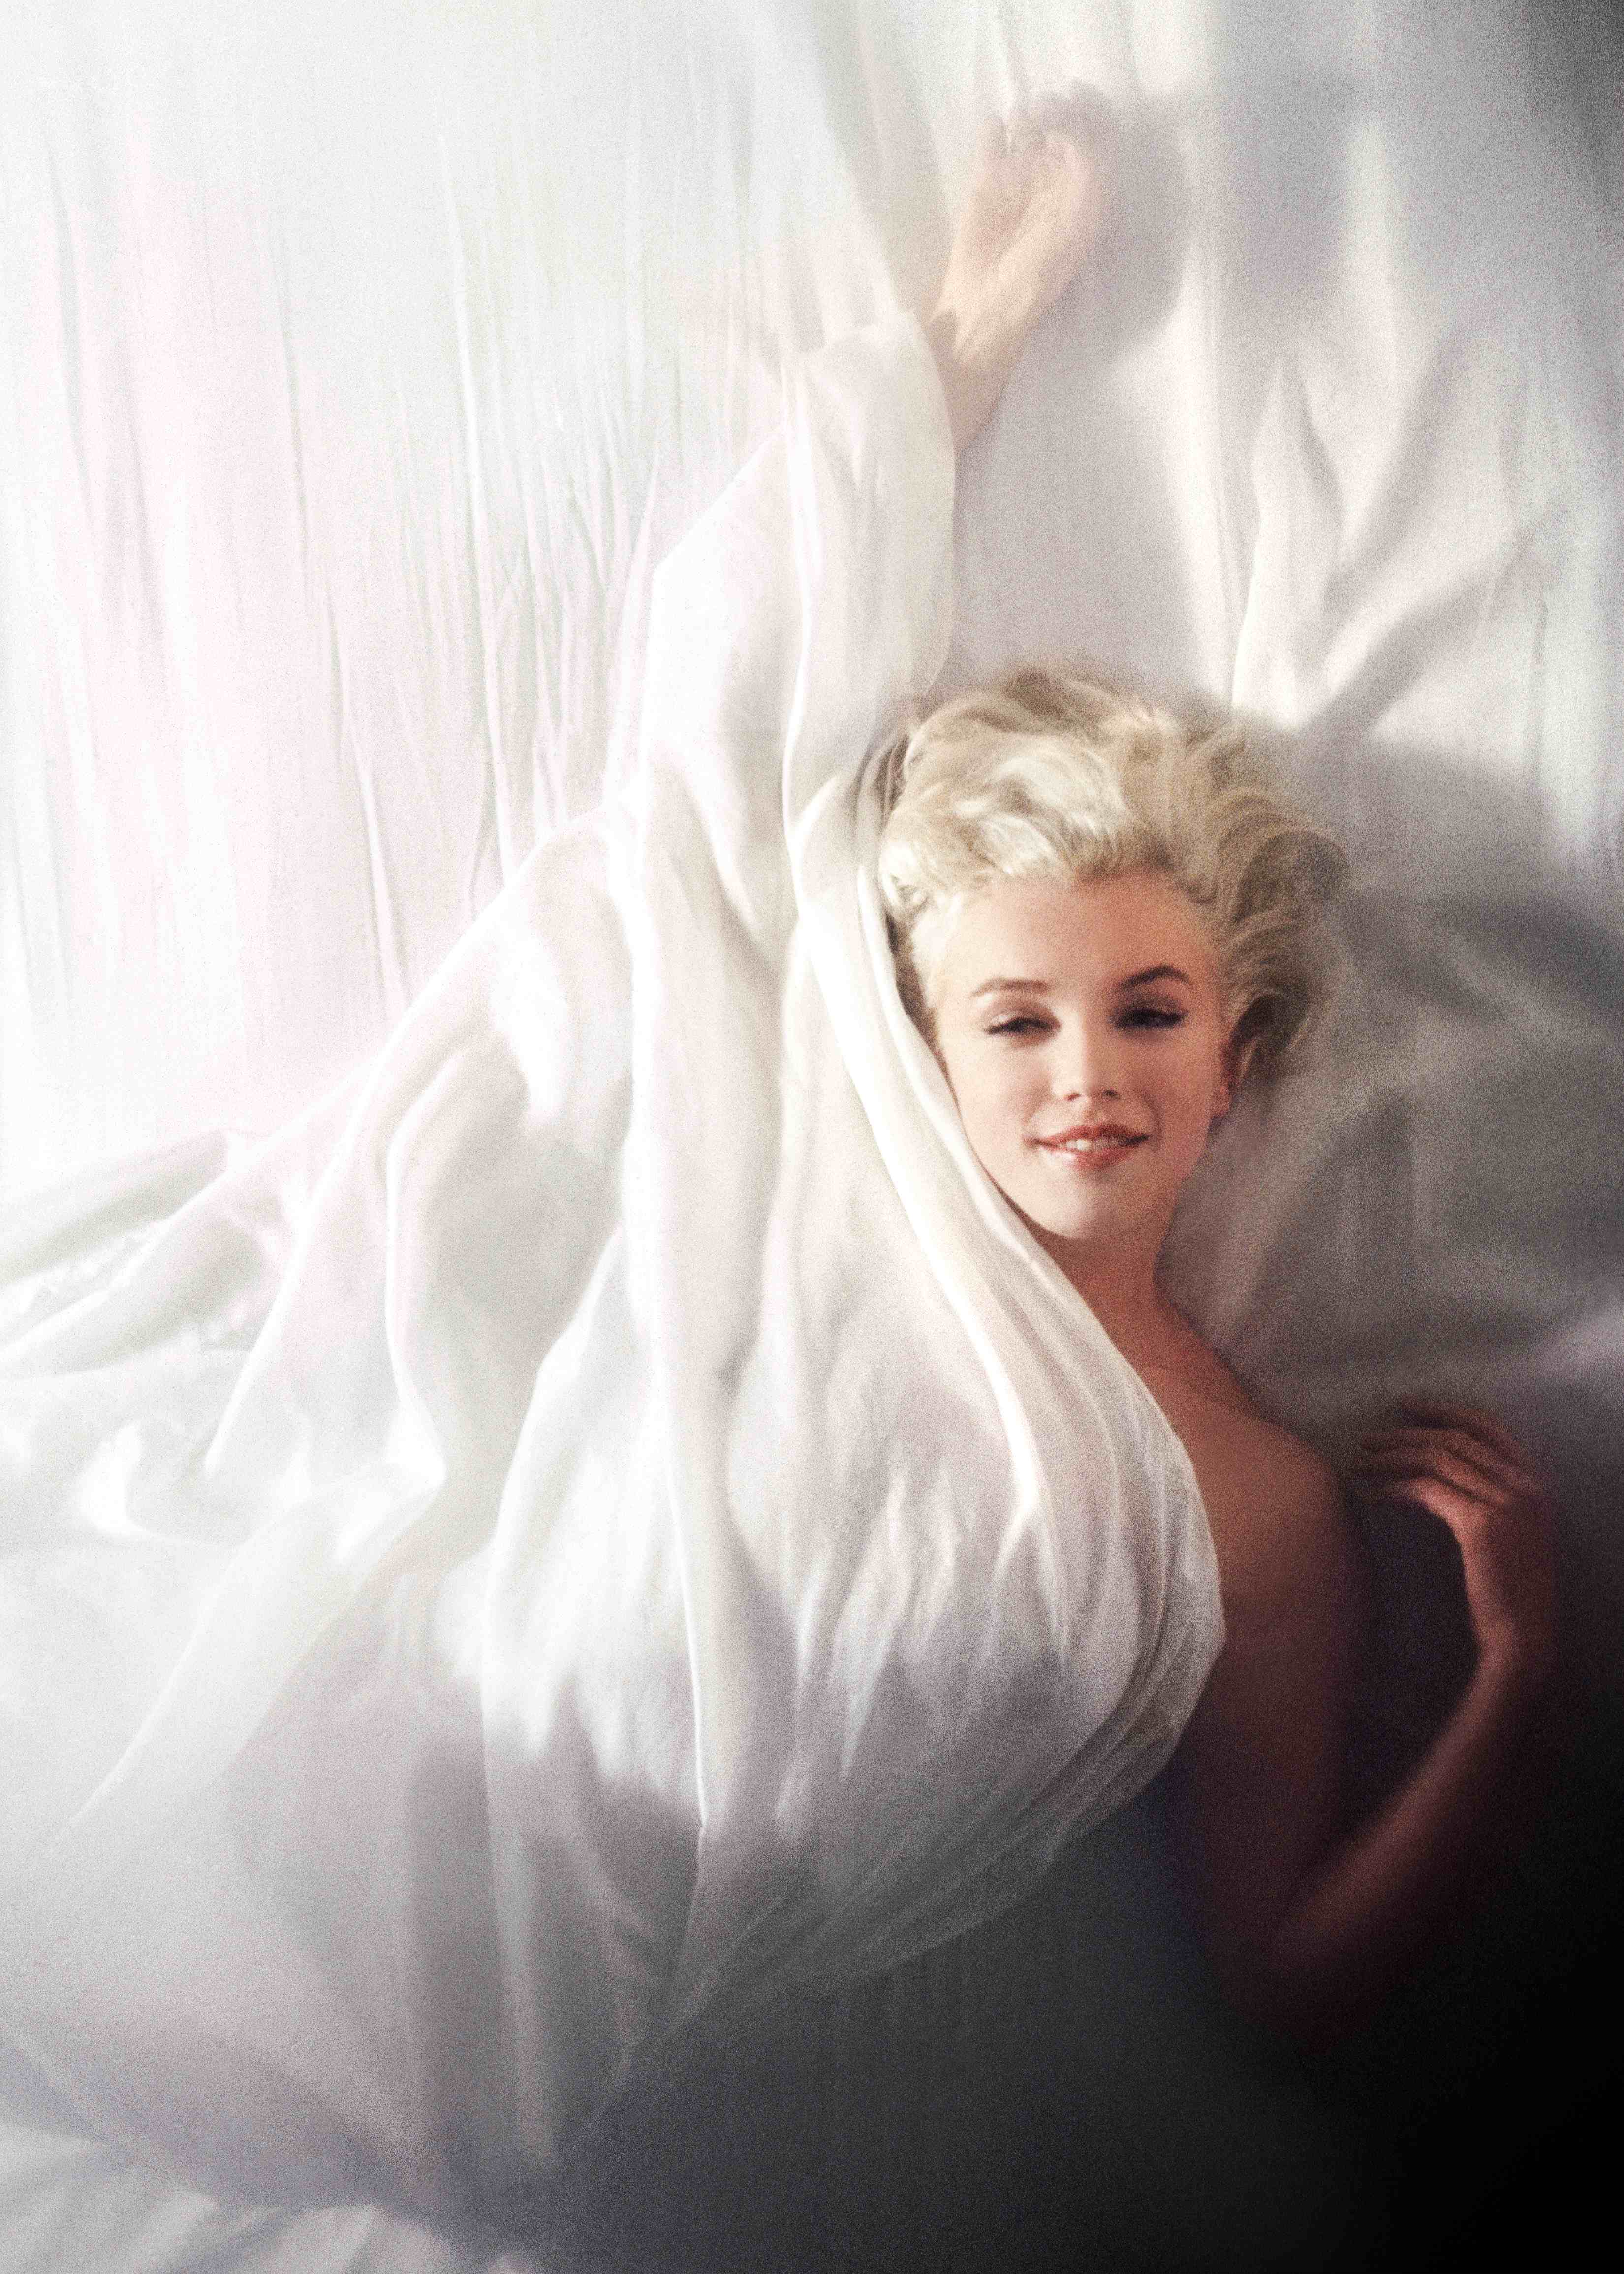 Marilyn by Douglas Kirkland, 1961.